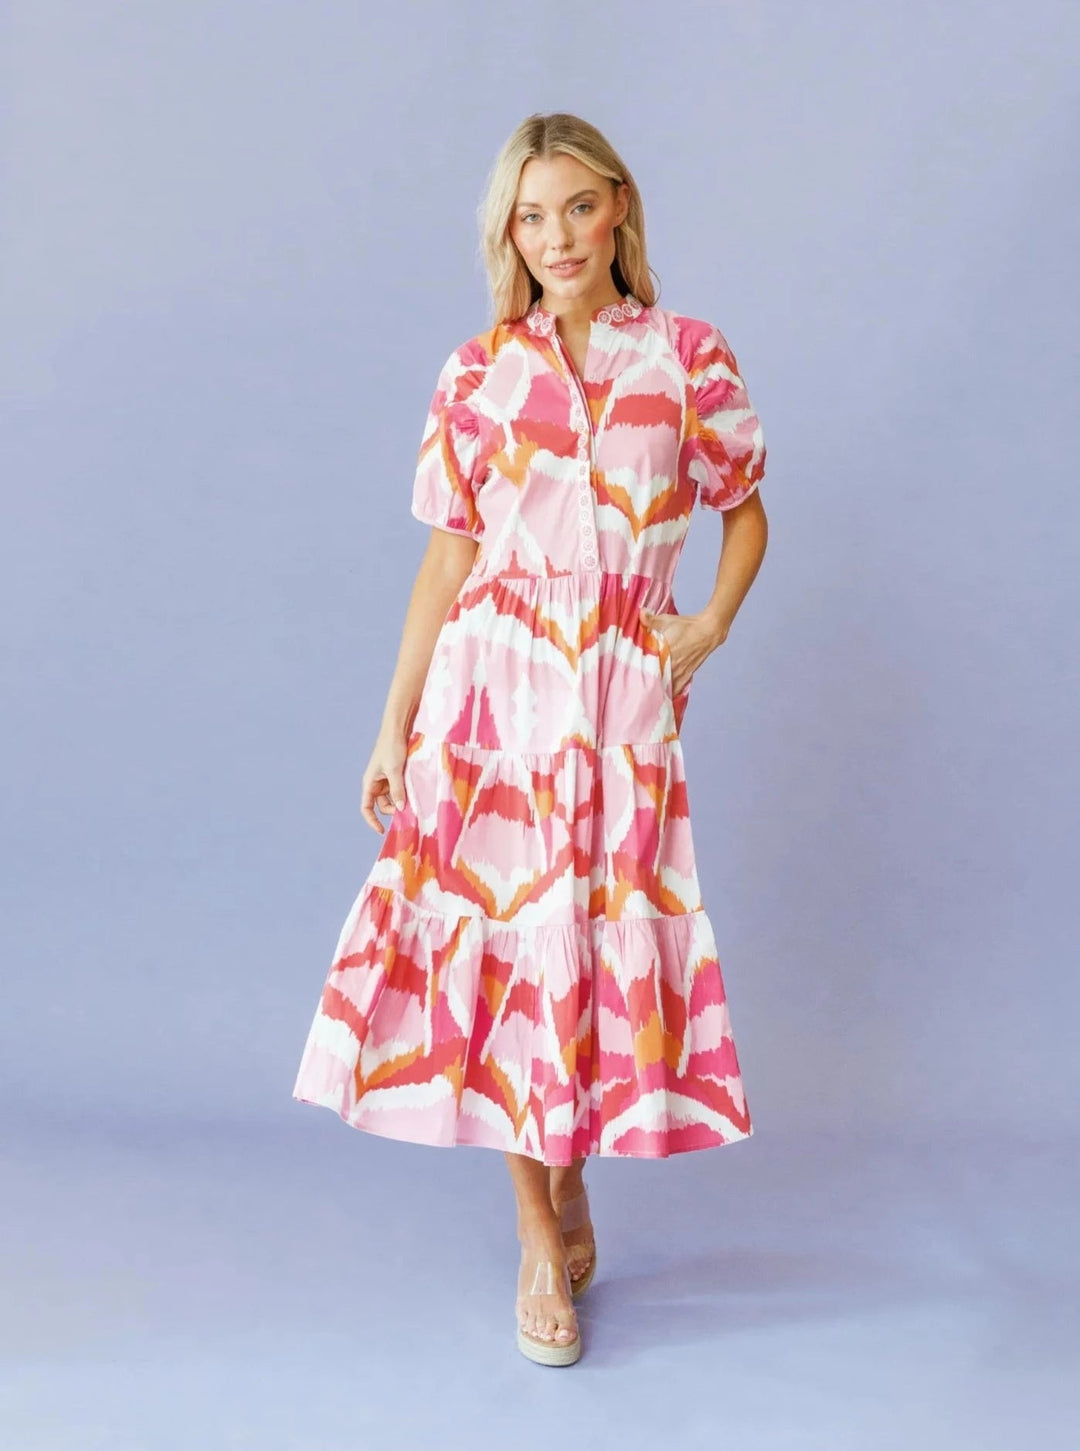 Sheridan French Dress Kimbell Dress in Flamingo Watermelon Ikat